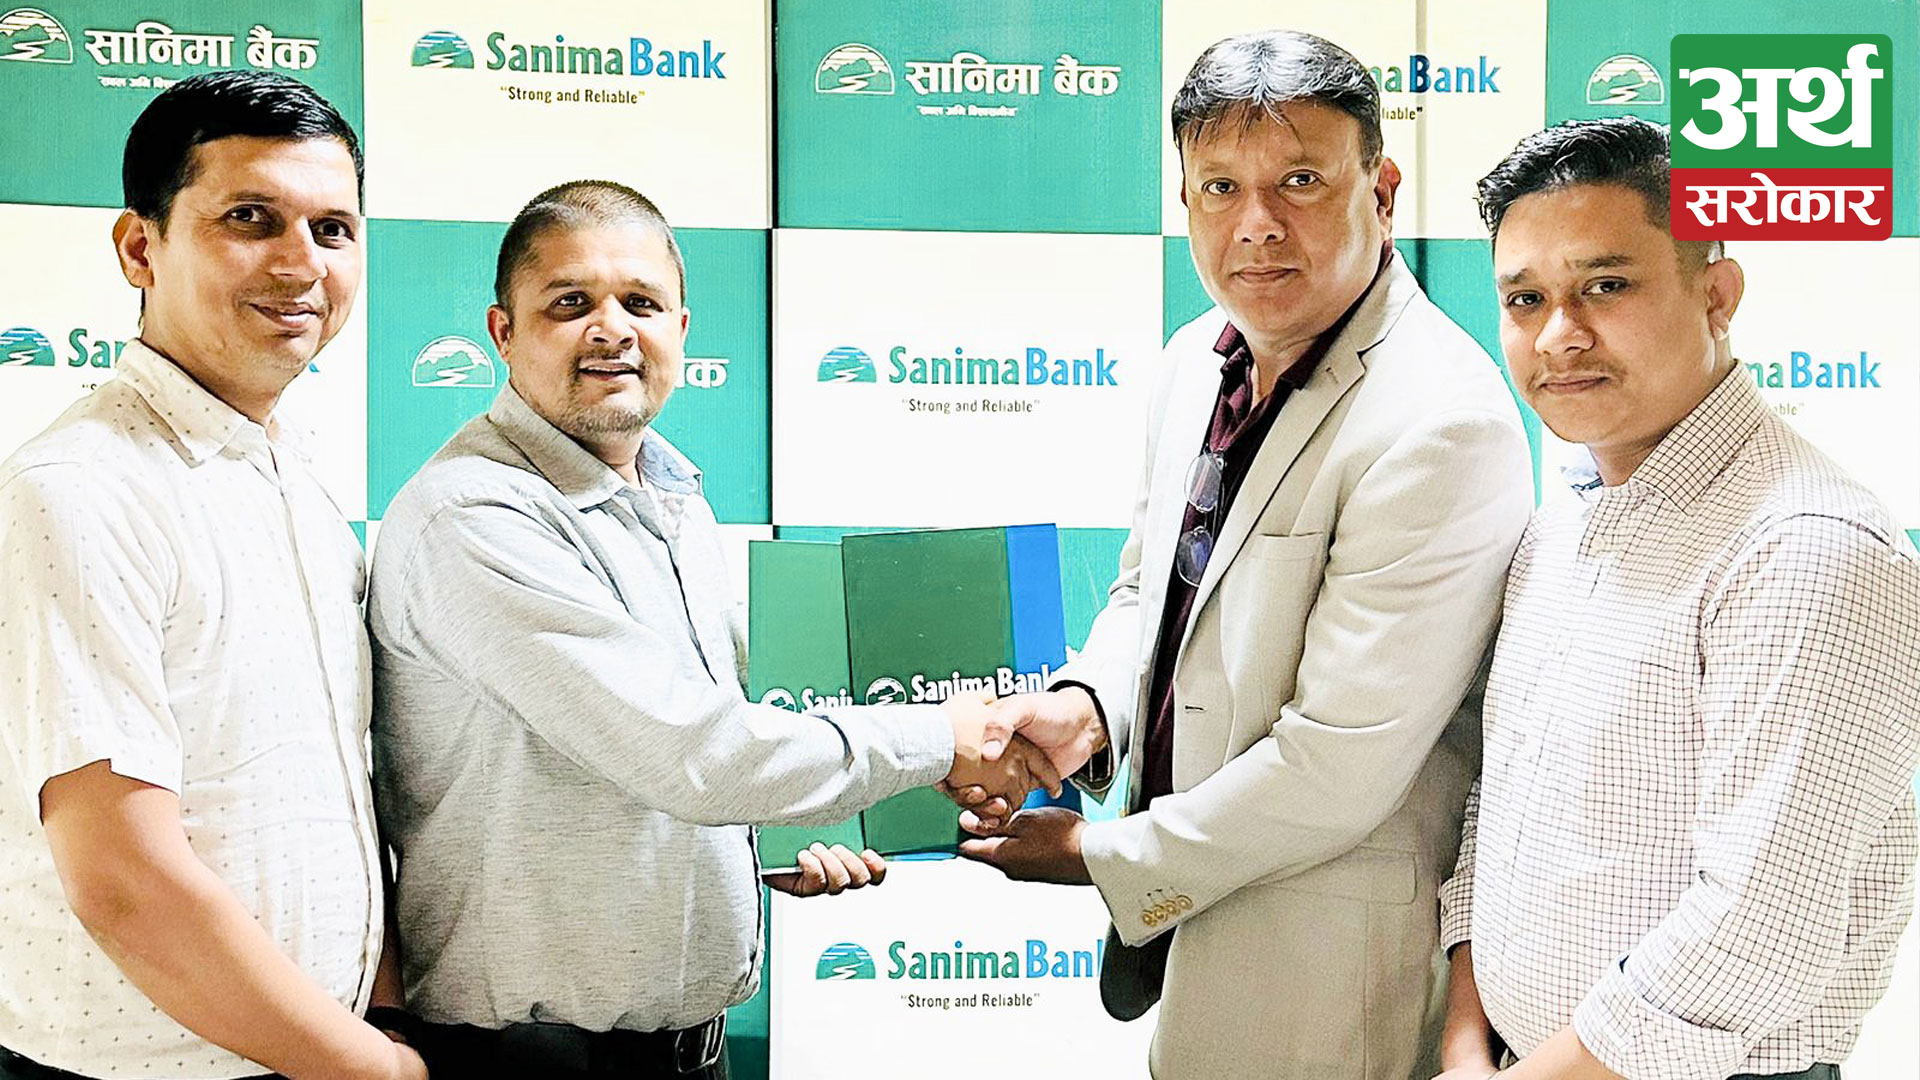 Advanced Automobiles and Sanima Bank Sign an Auto Loan Agreement